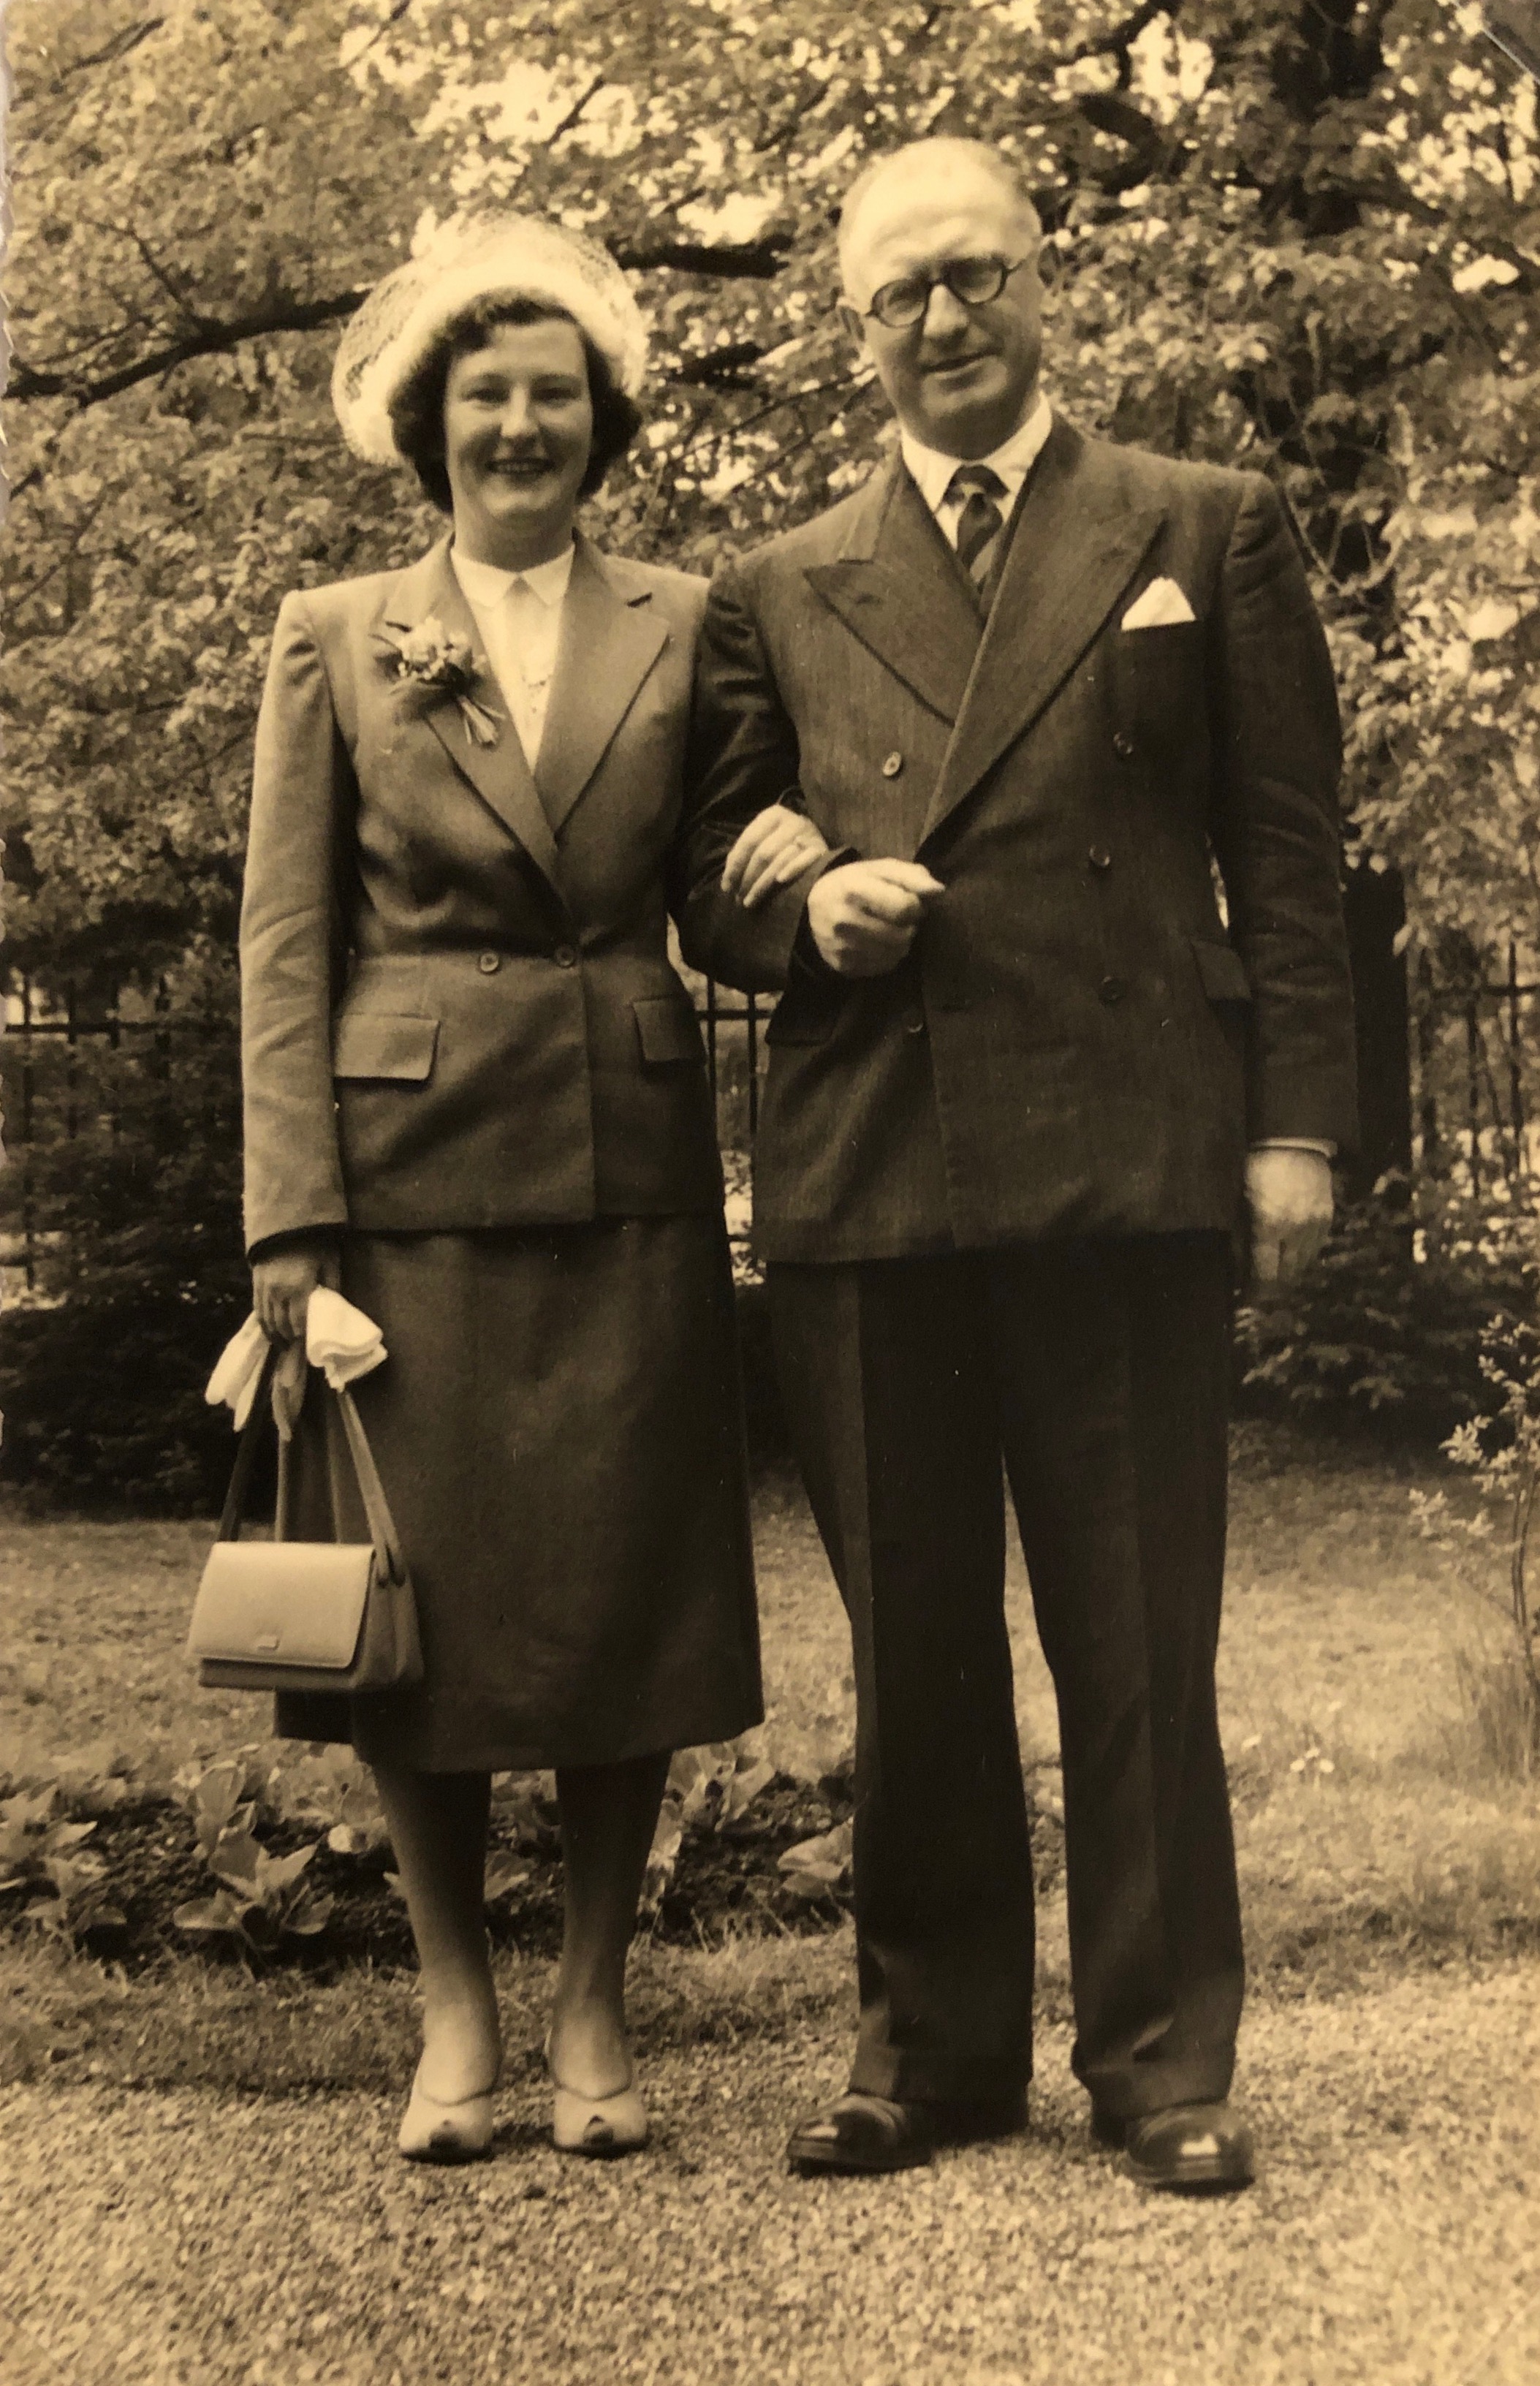 My parents wedding in Bern, Switzerland May 1951